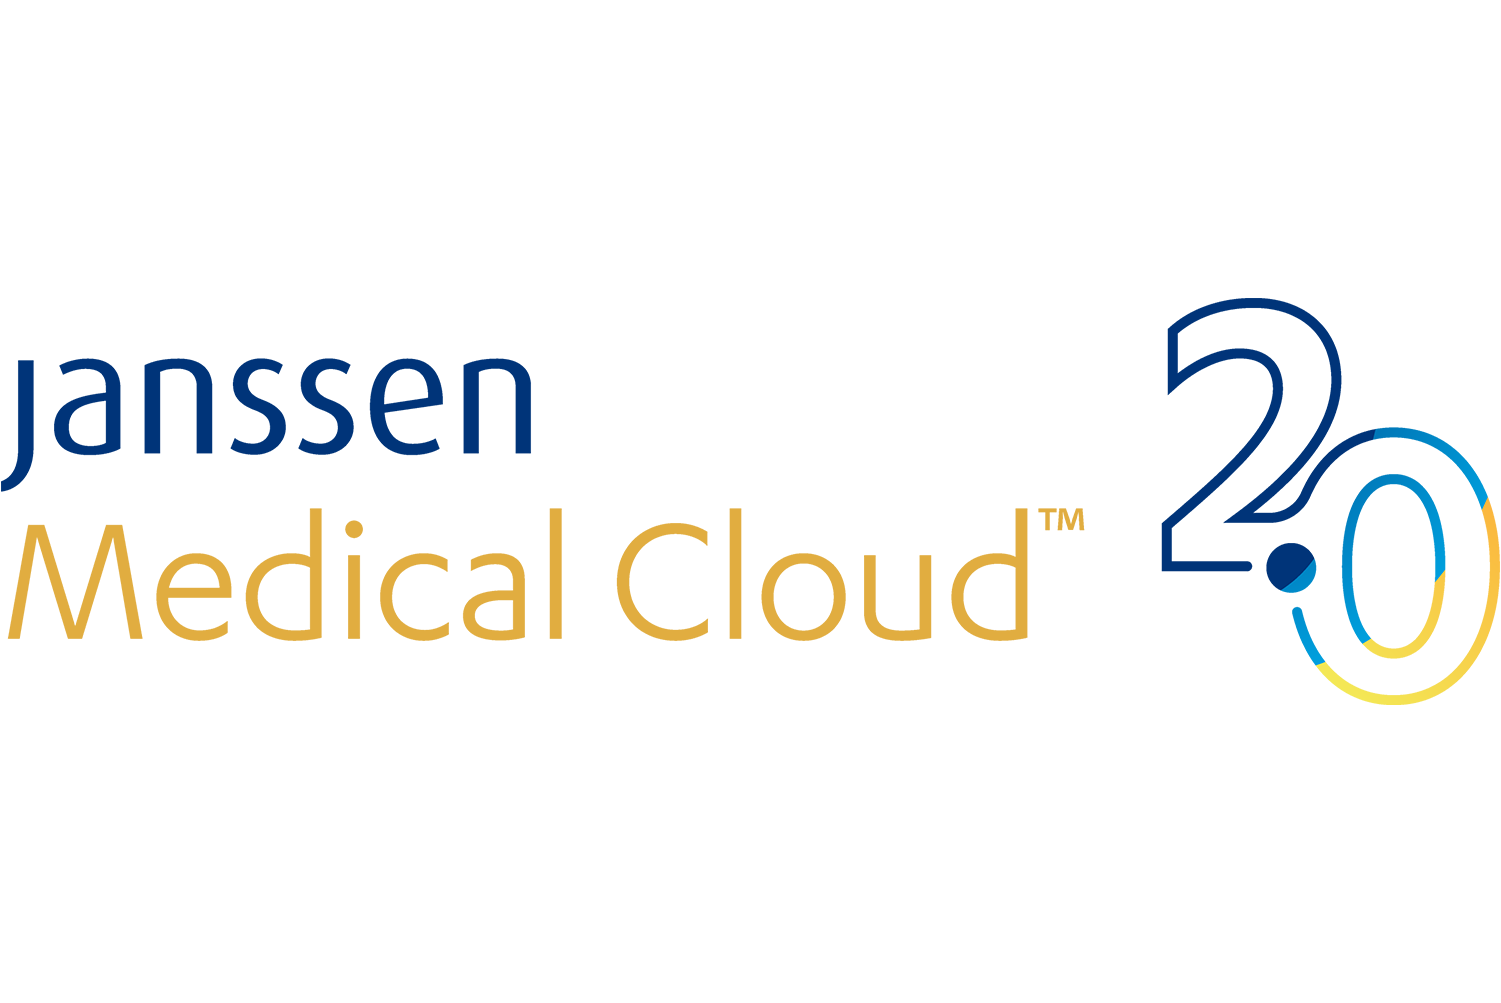 Logótipo do website Janssen Medical Cloud, composto pelas palavras 